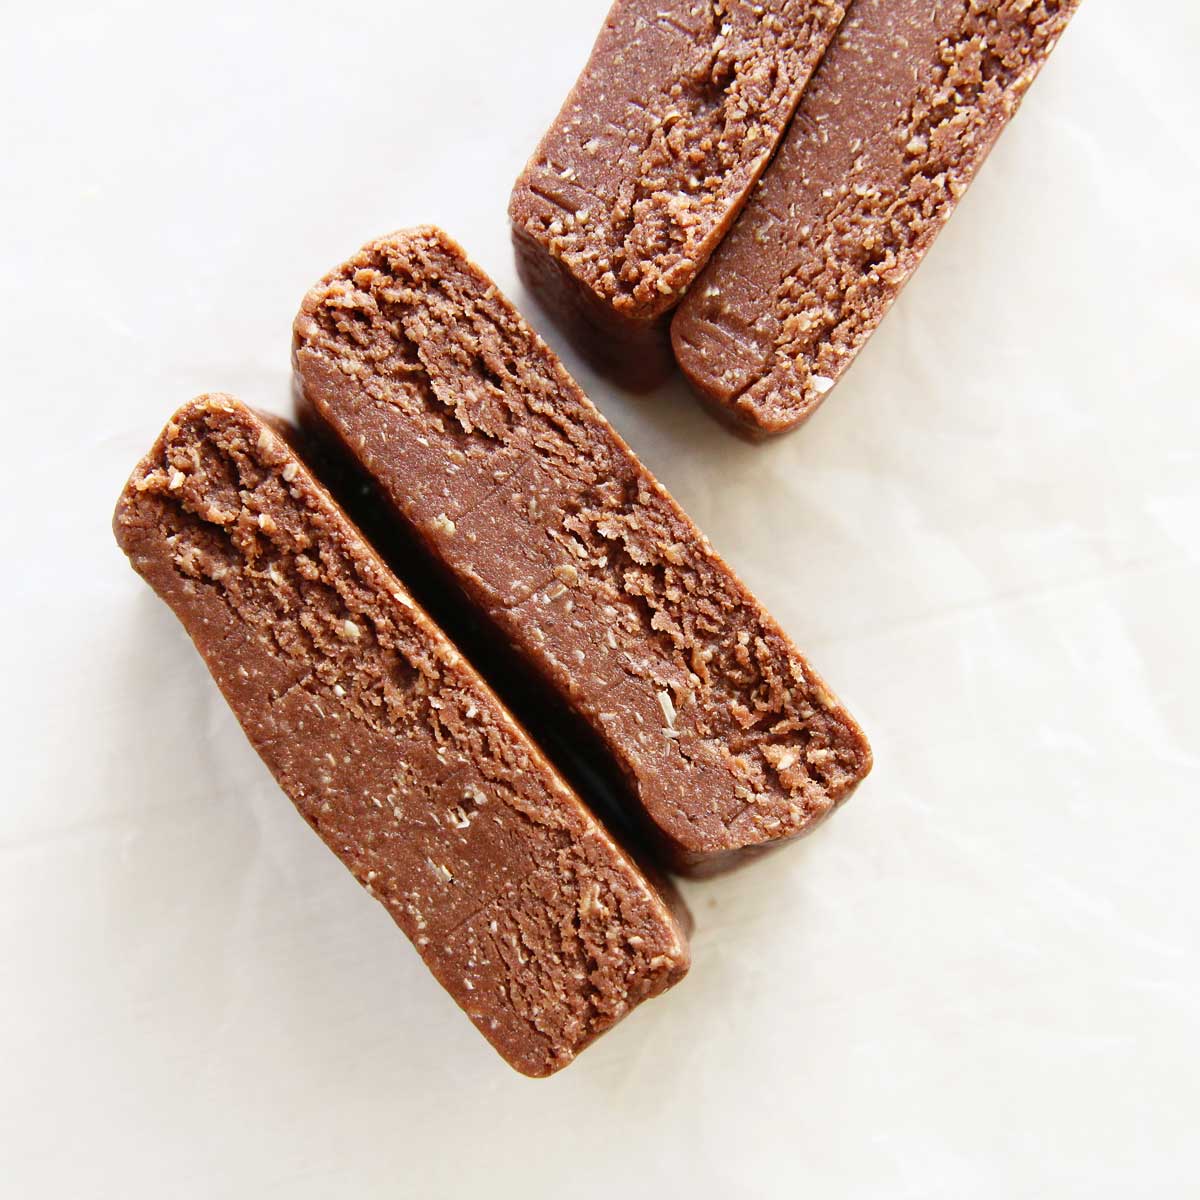 10-Minute Chocolate Peanut Butter Oatmeal Protein Bars - Zucchini Flatbread